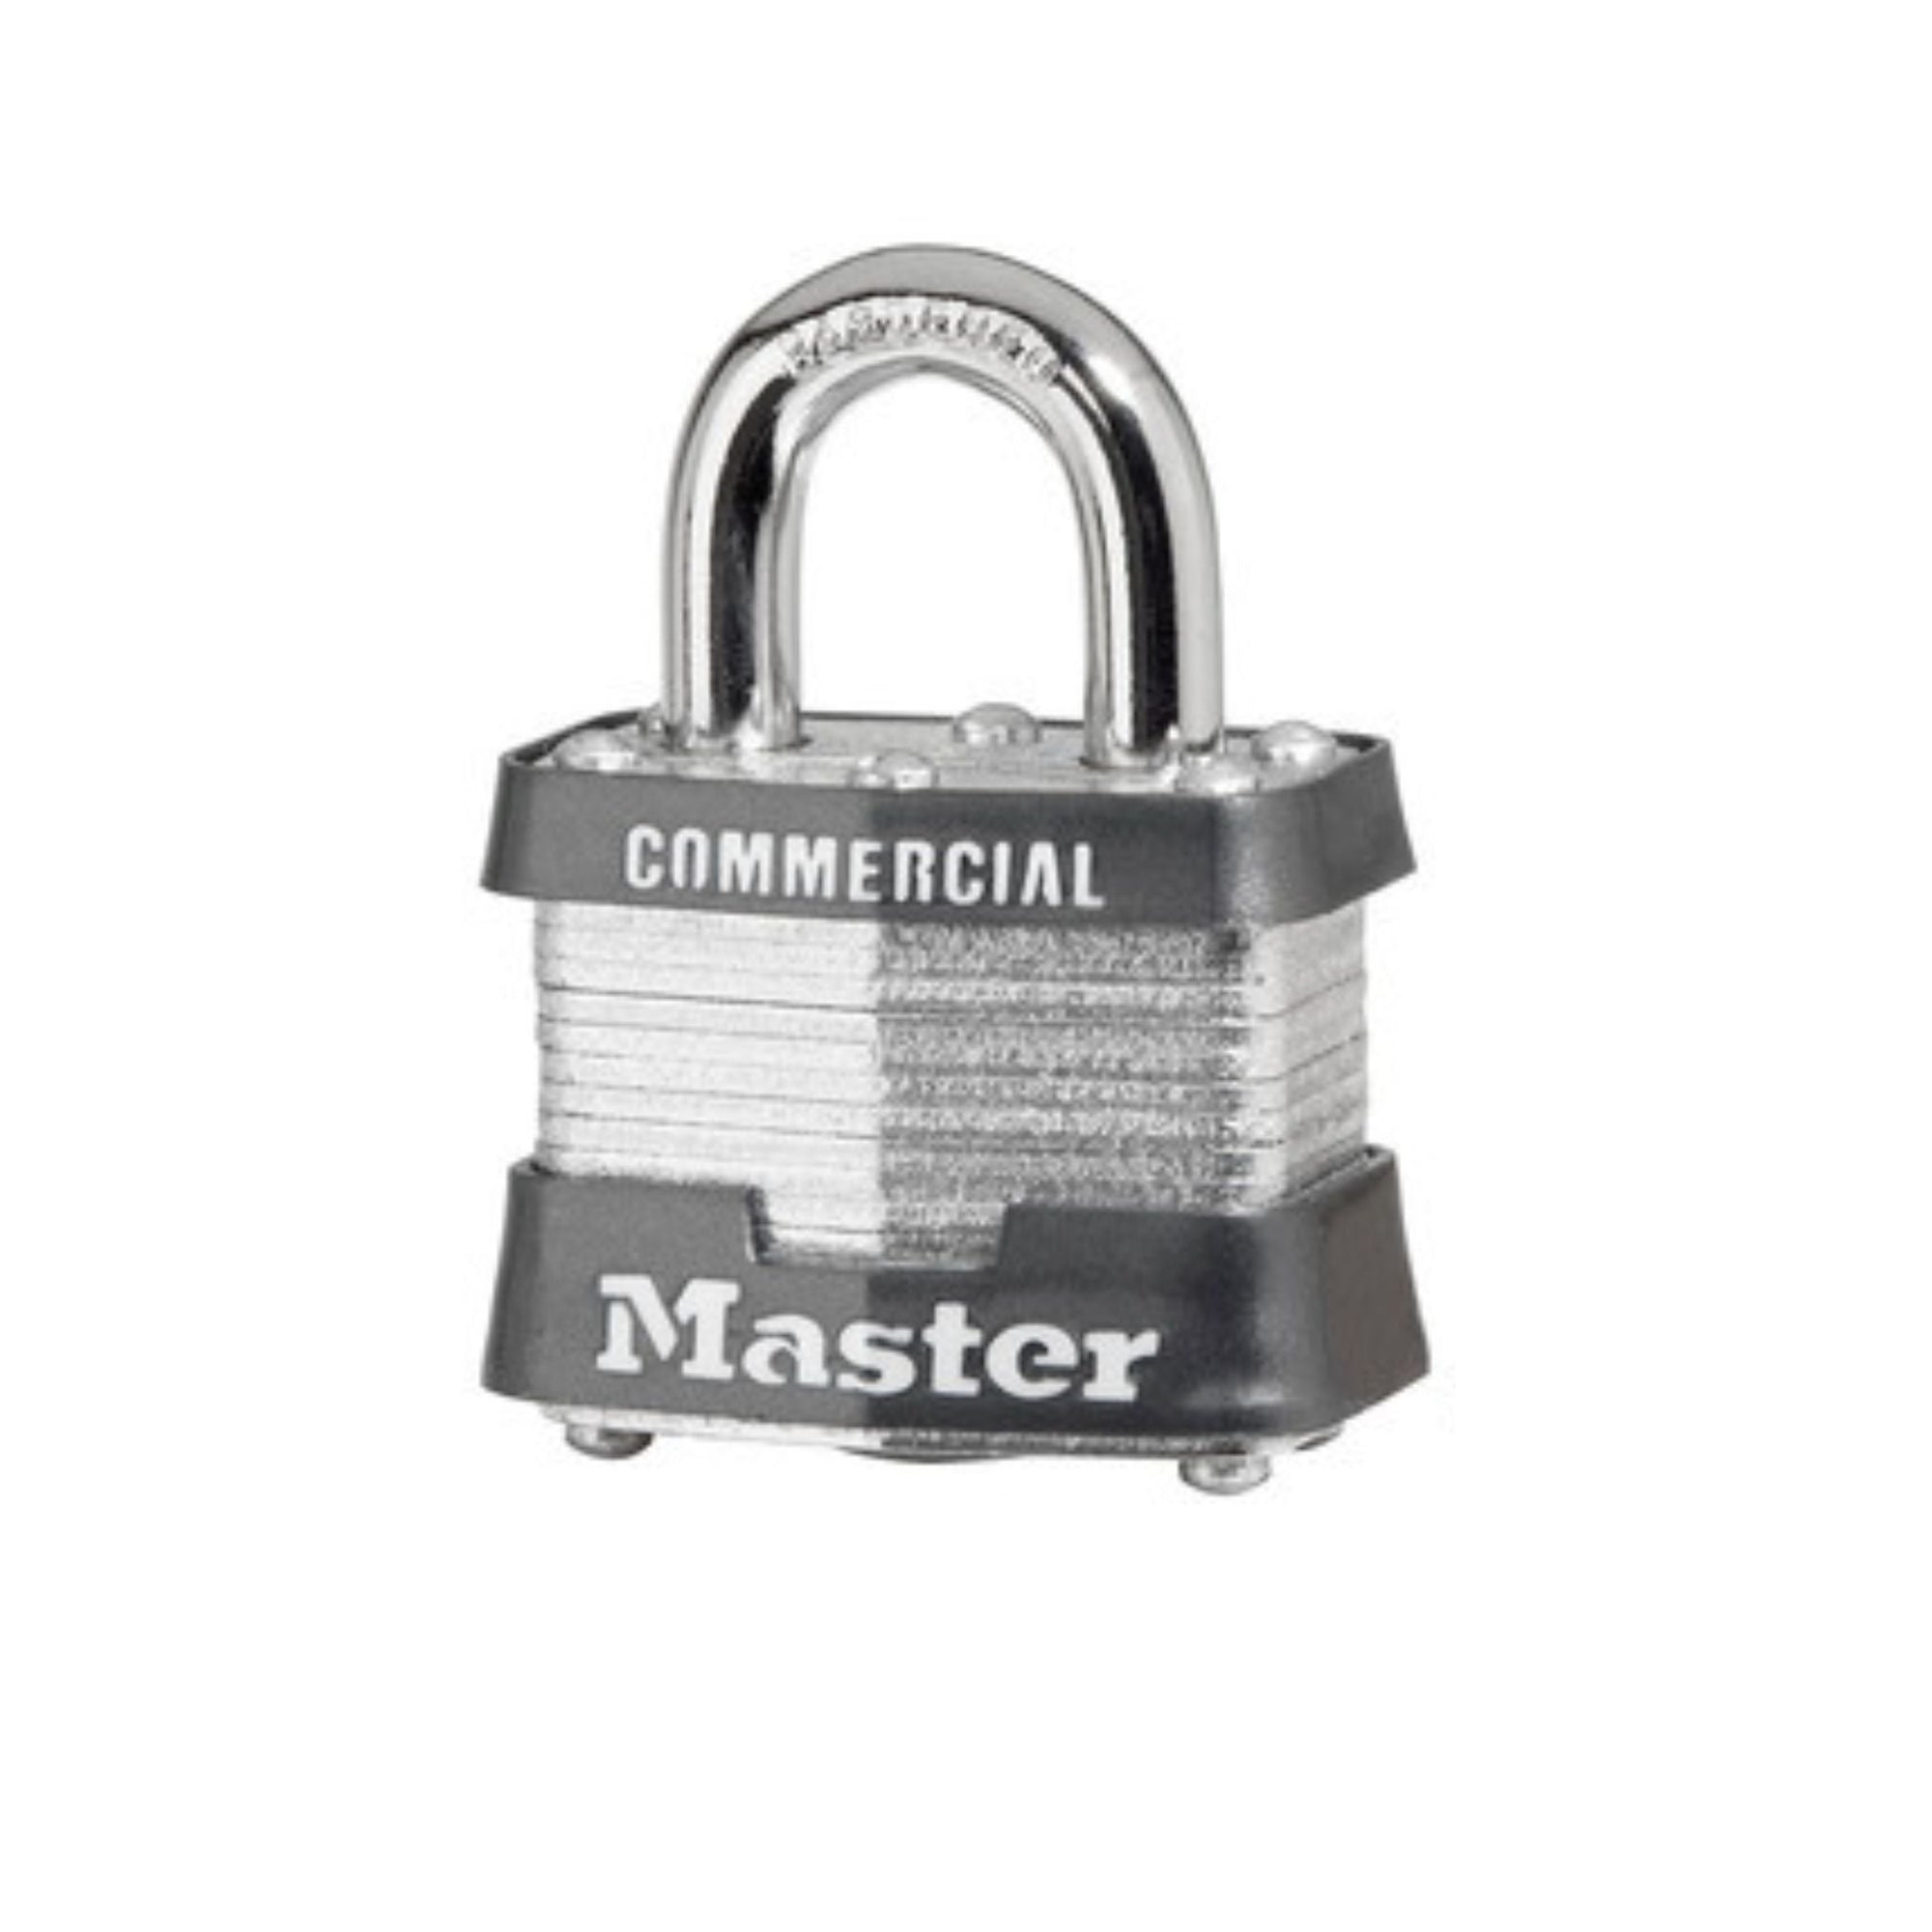 Master Lock 3KA 0309 Lock Laminated steel No. 3 Series Padlock Keyed to Match Existing Key Number KA0309 - The Lock Source